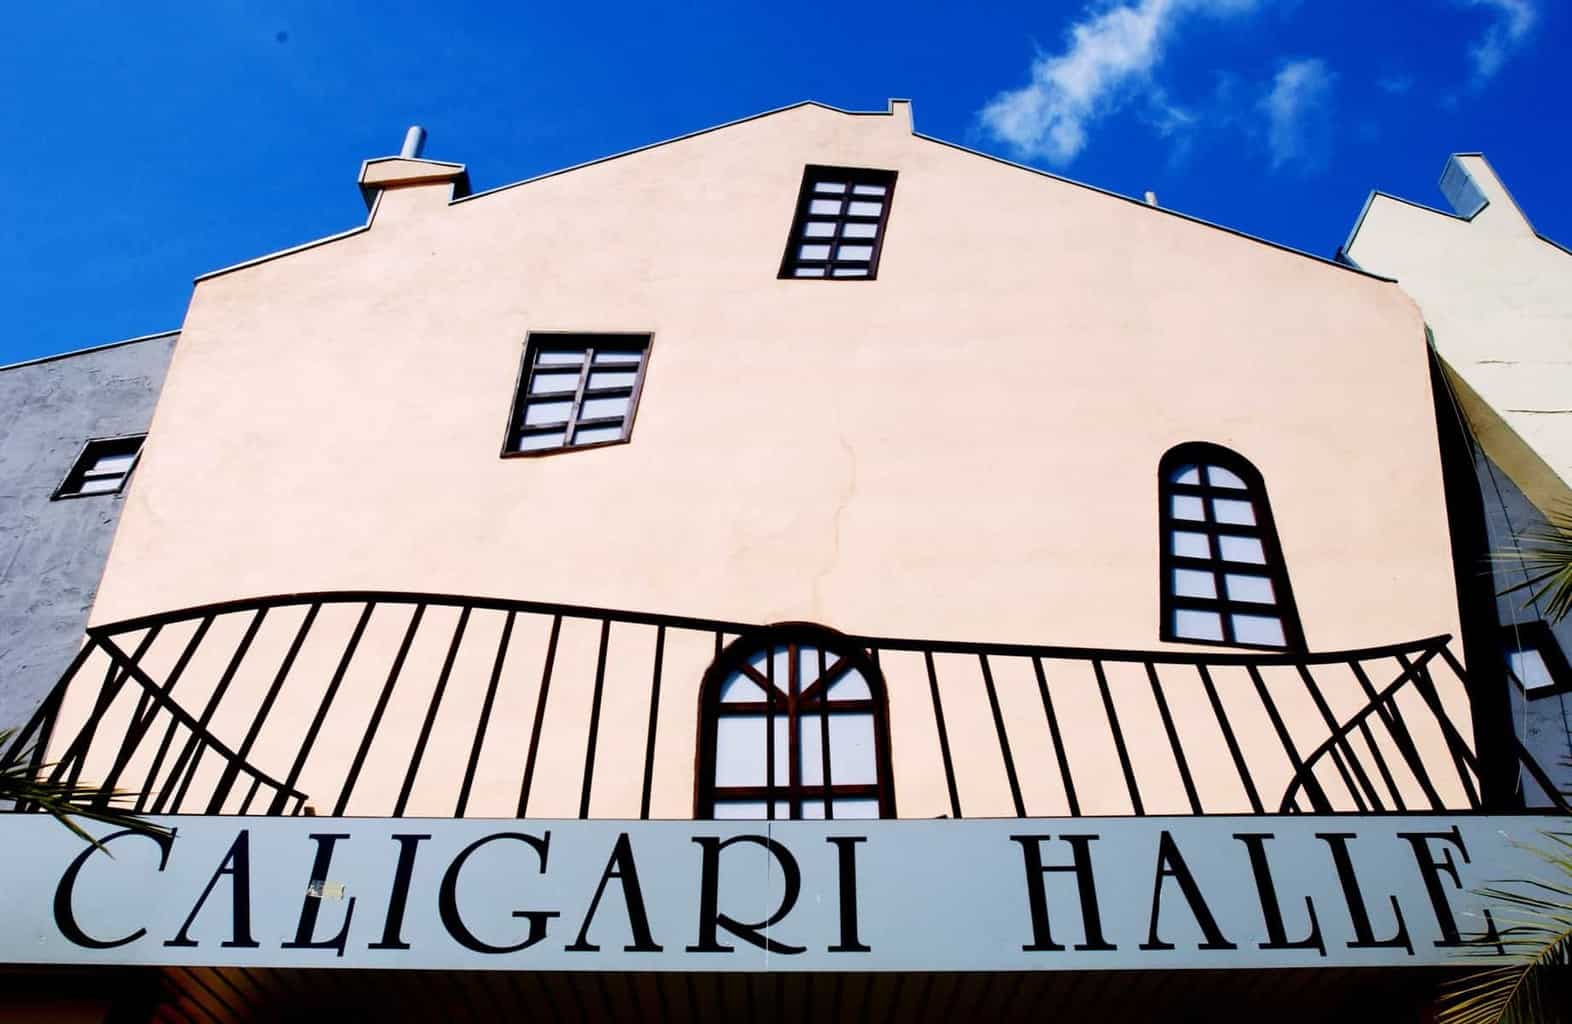 Caligari Halle Potsdam